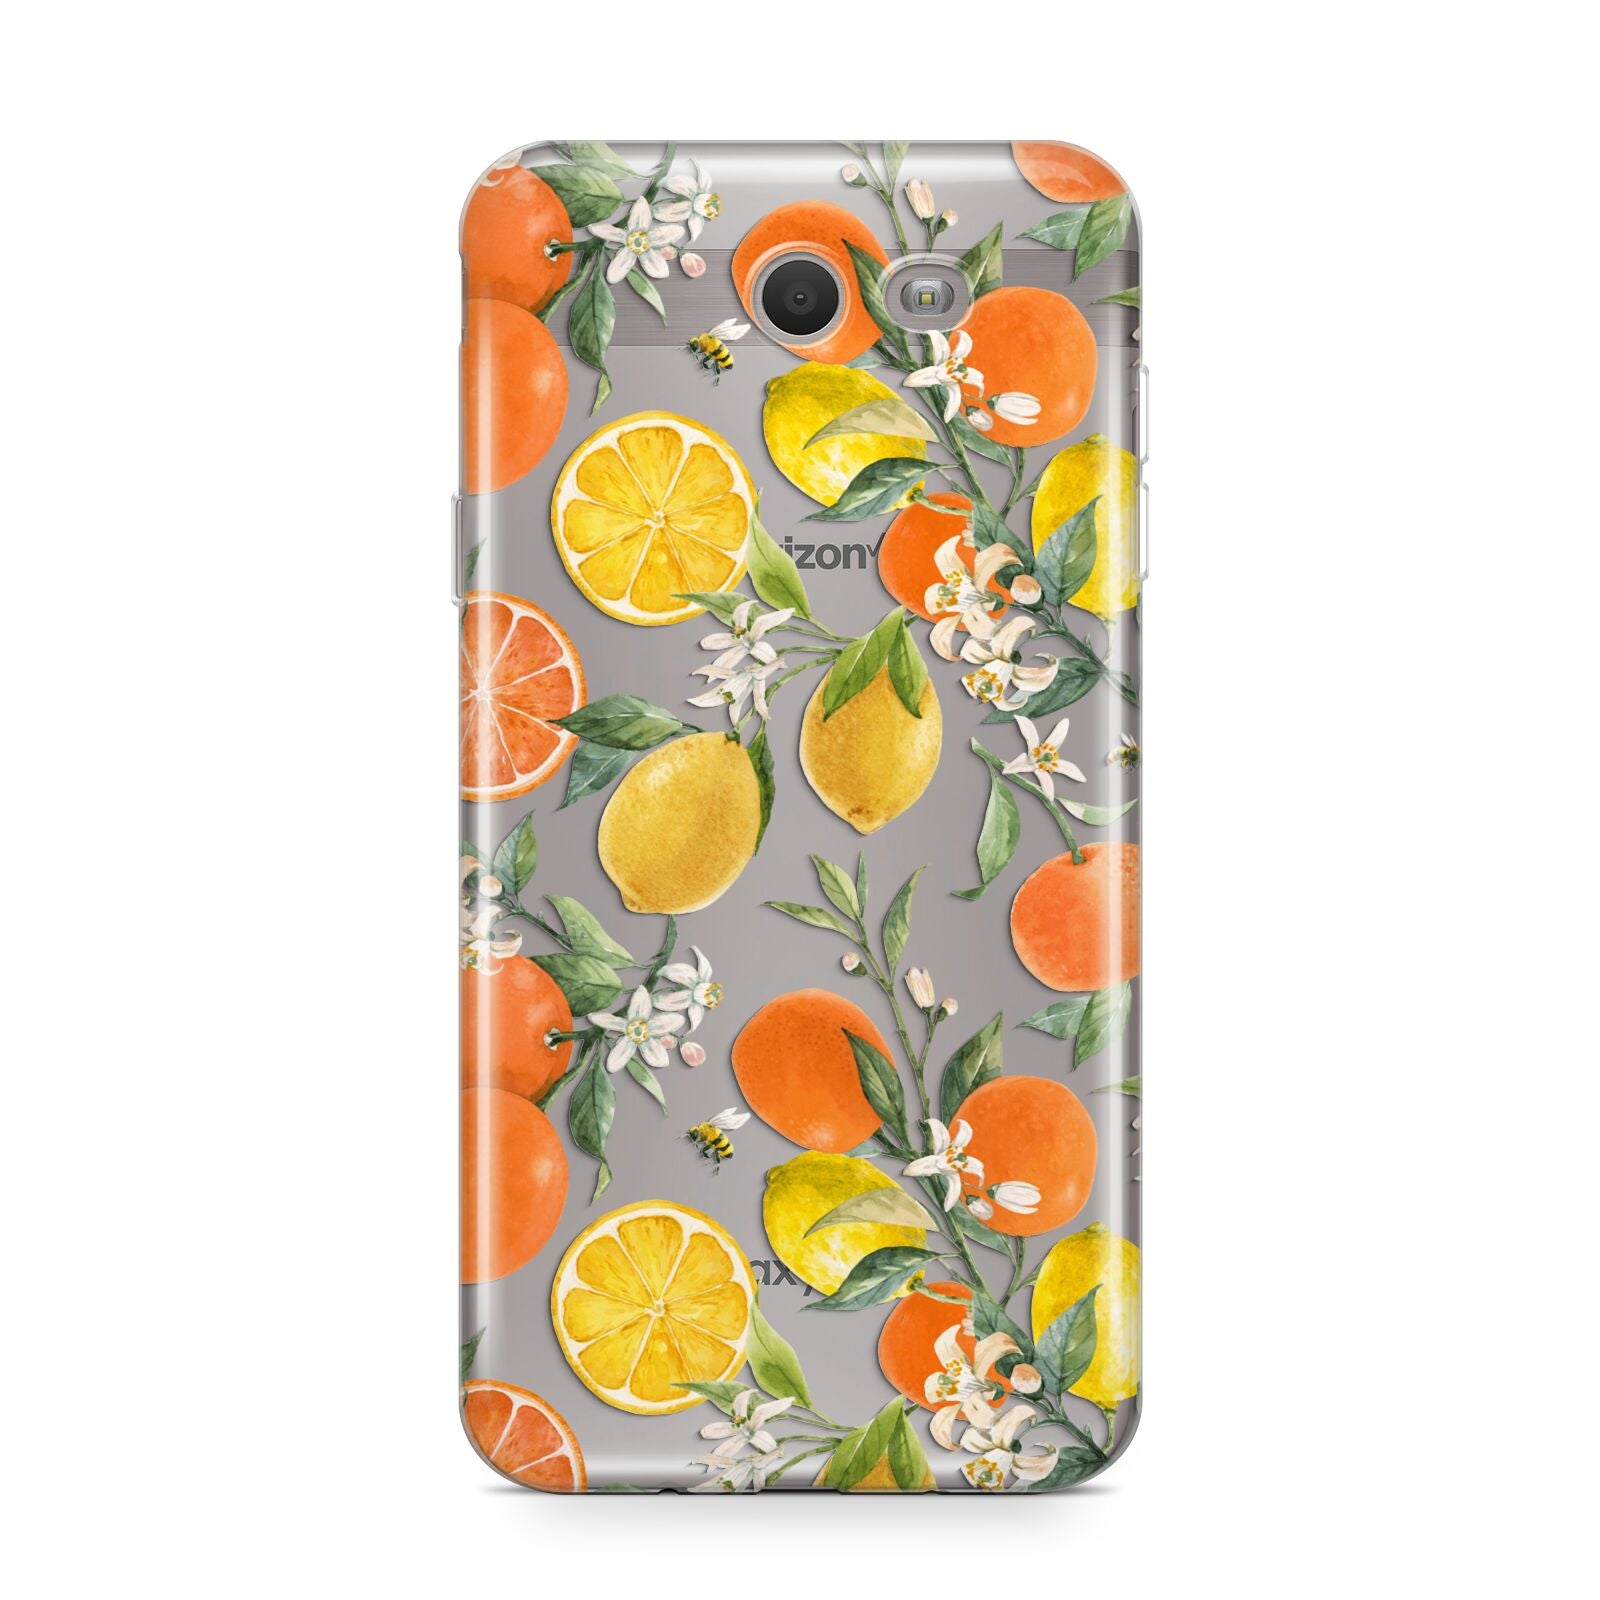 Lemons and Oranges Samsung Galaxy J7 2017 Case